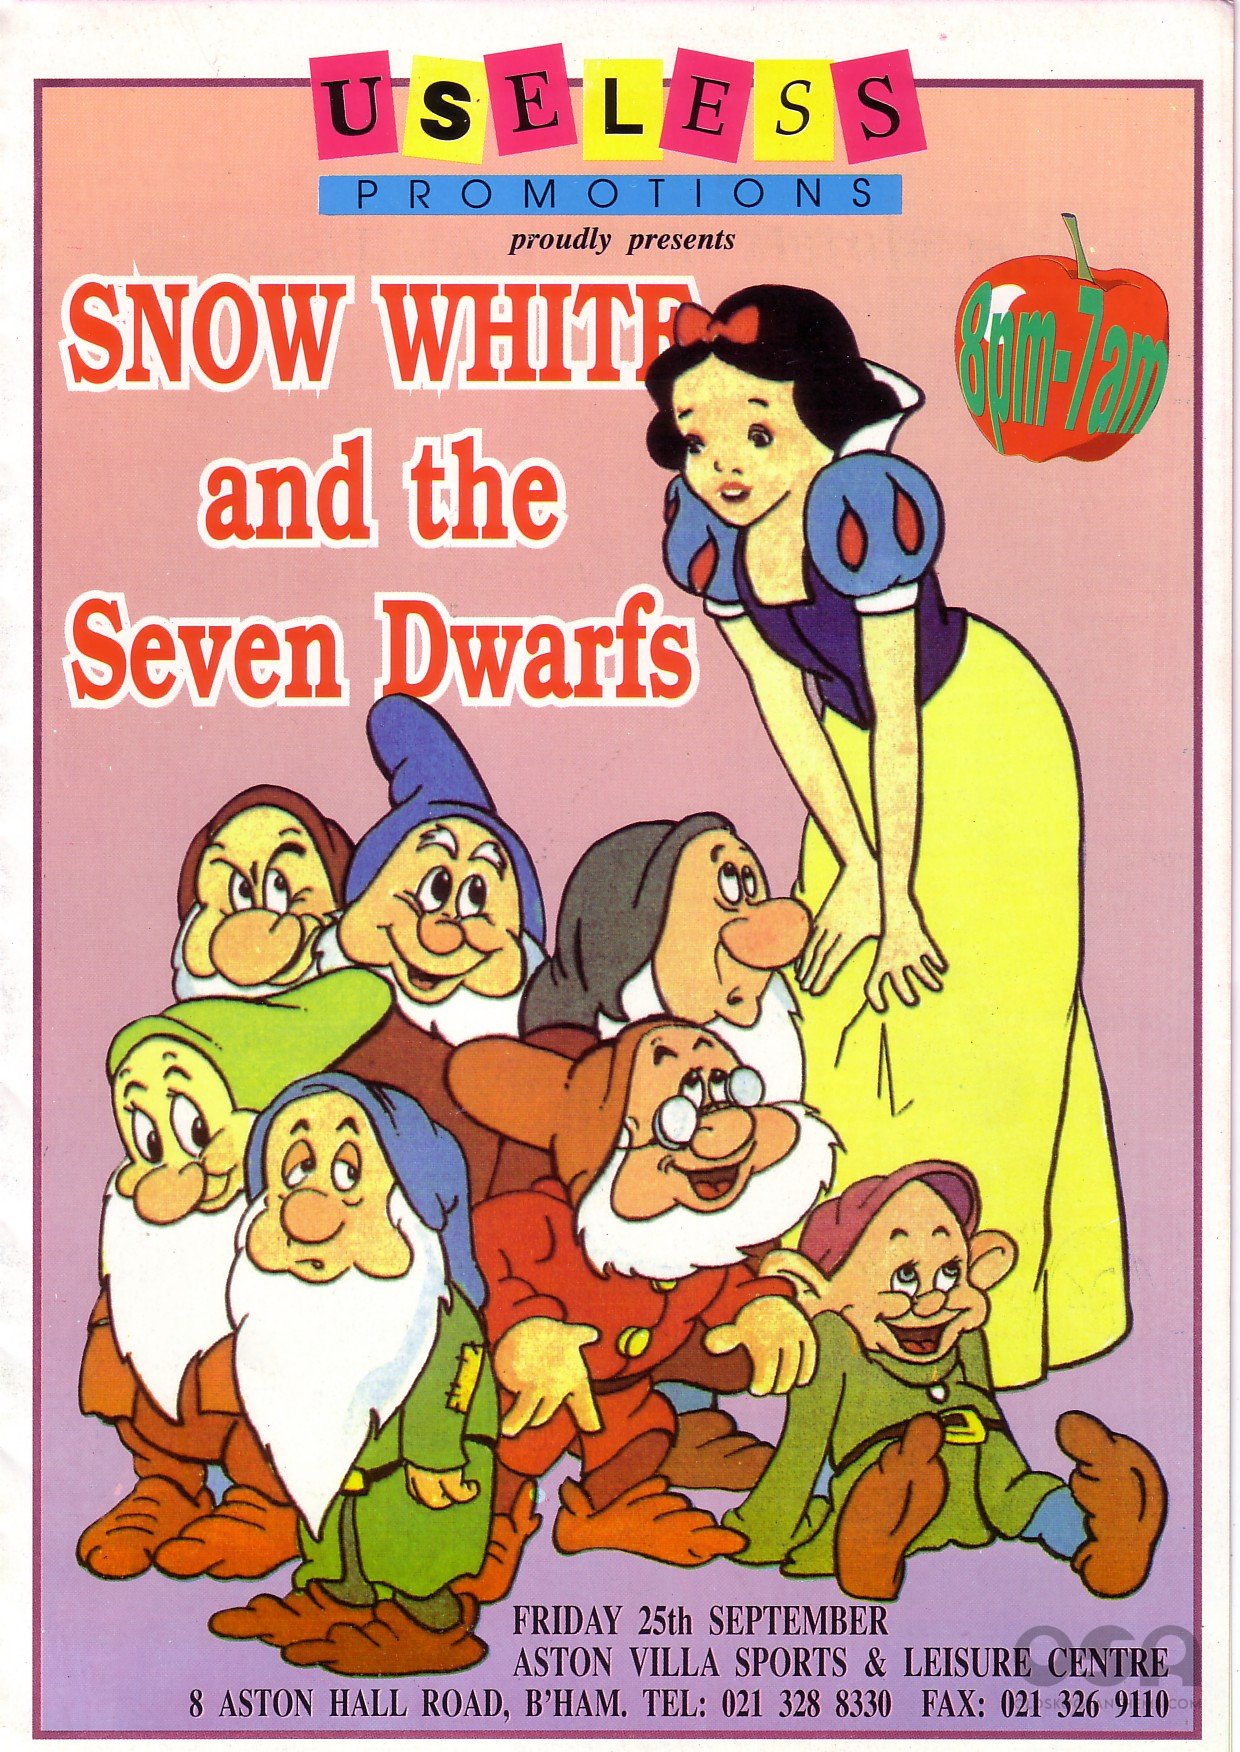 1_Snow_White___The_Seven_Dwarfs___Aston_Villa_Leisure_Centre_Birmingham_Fri_25th_September.jpg